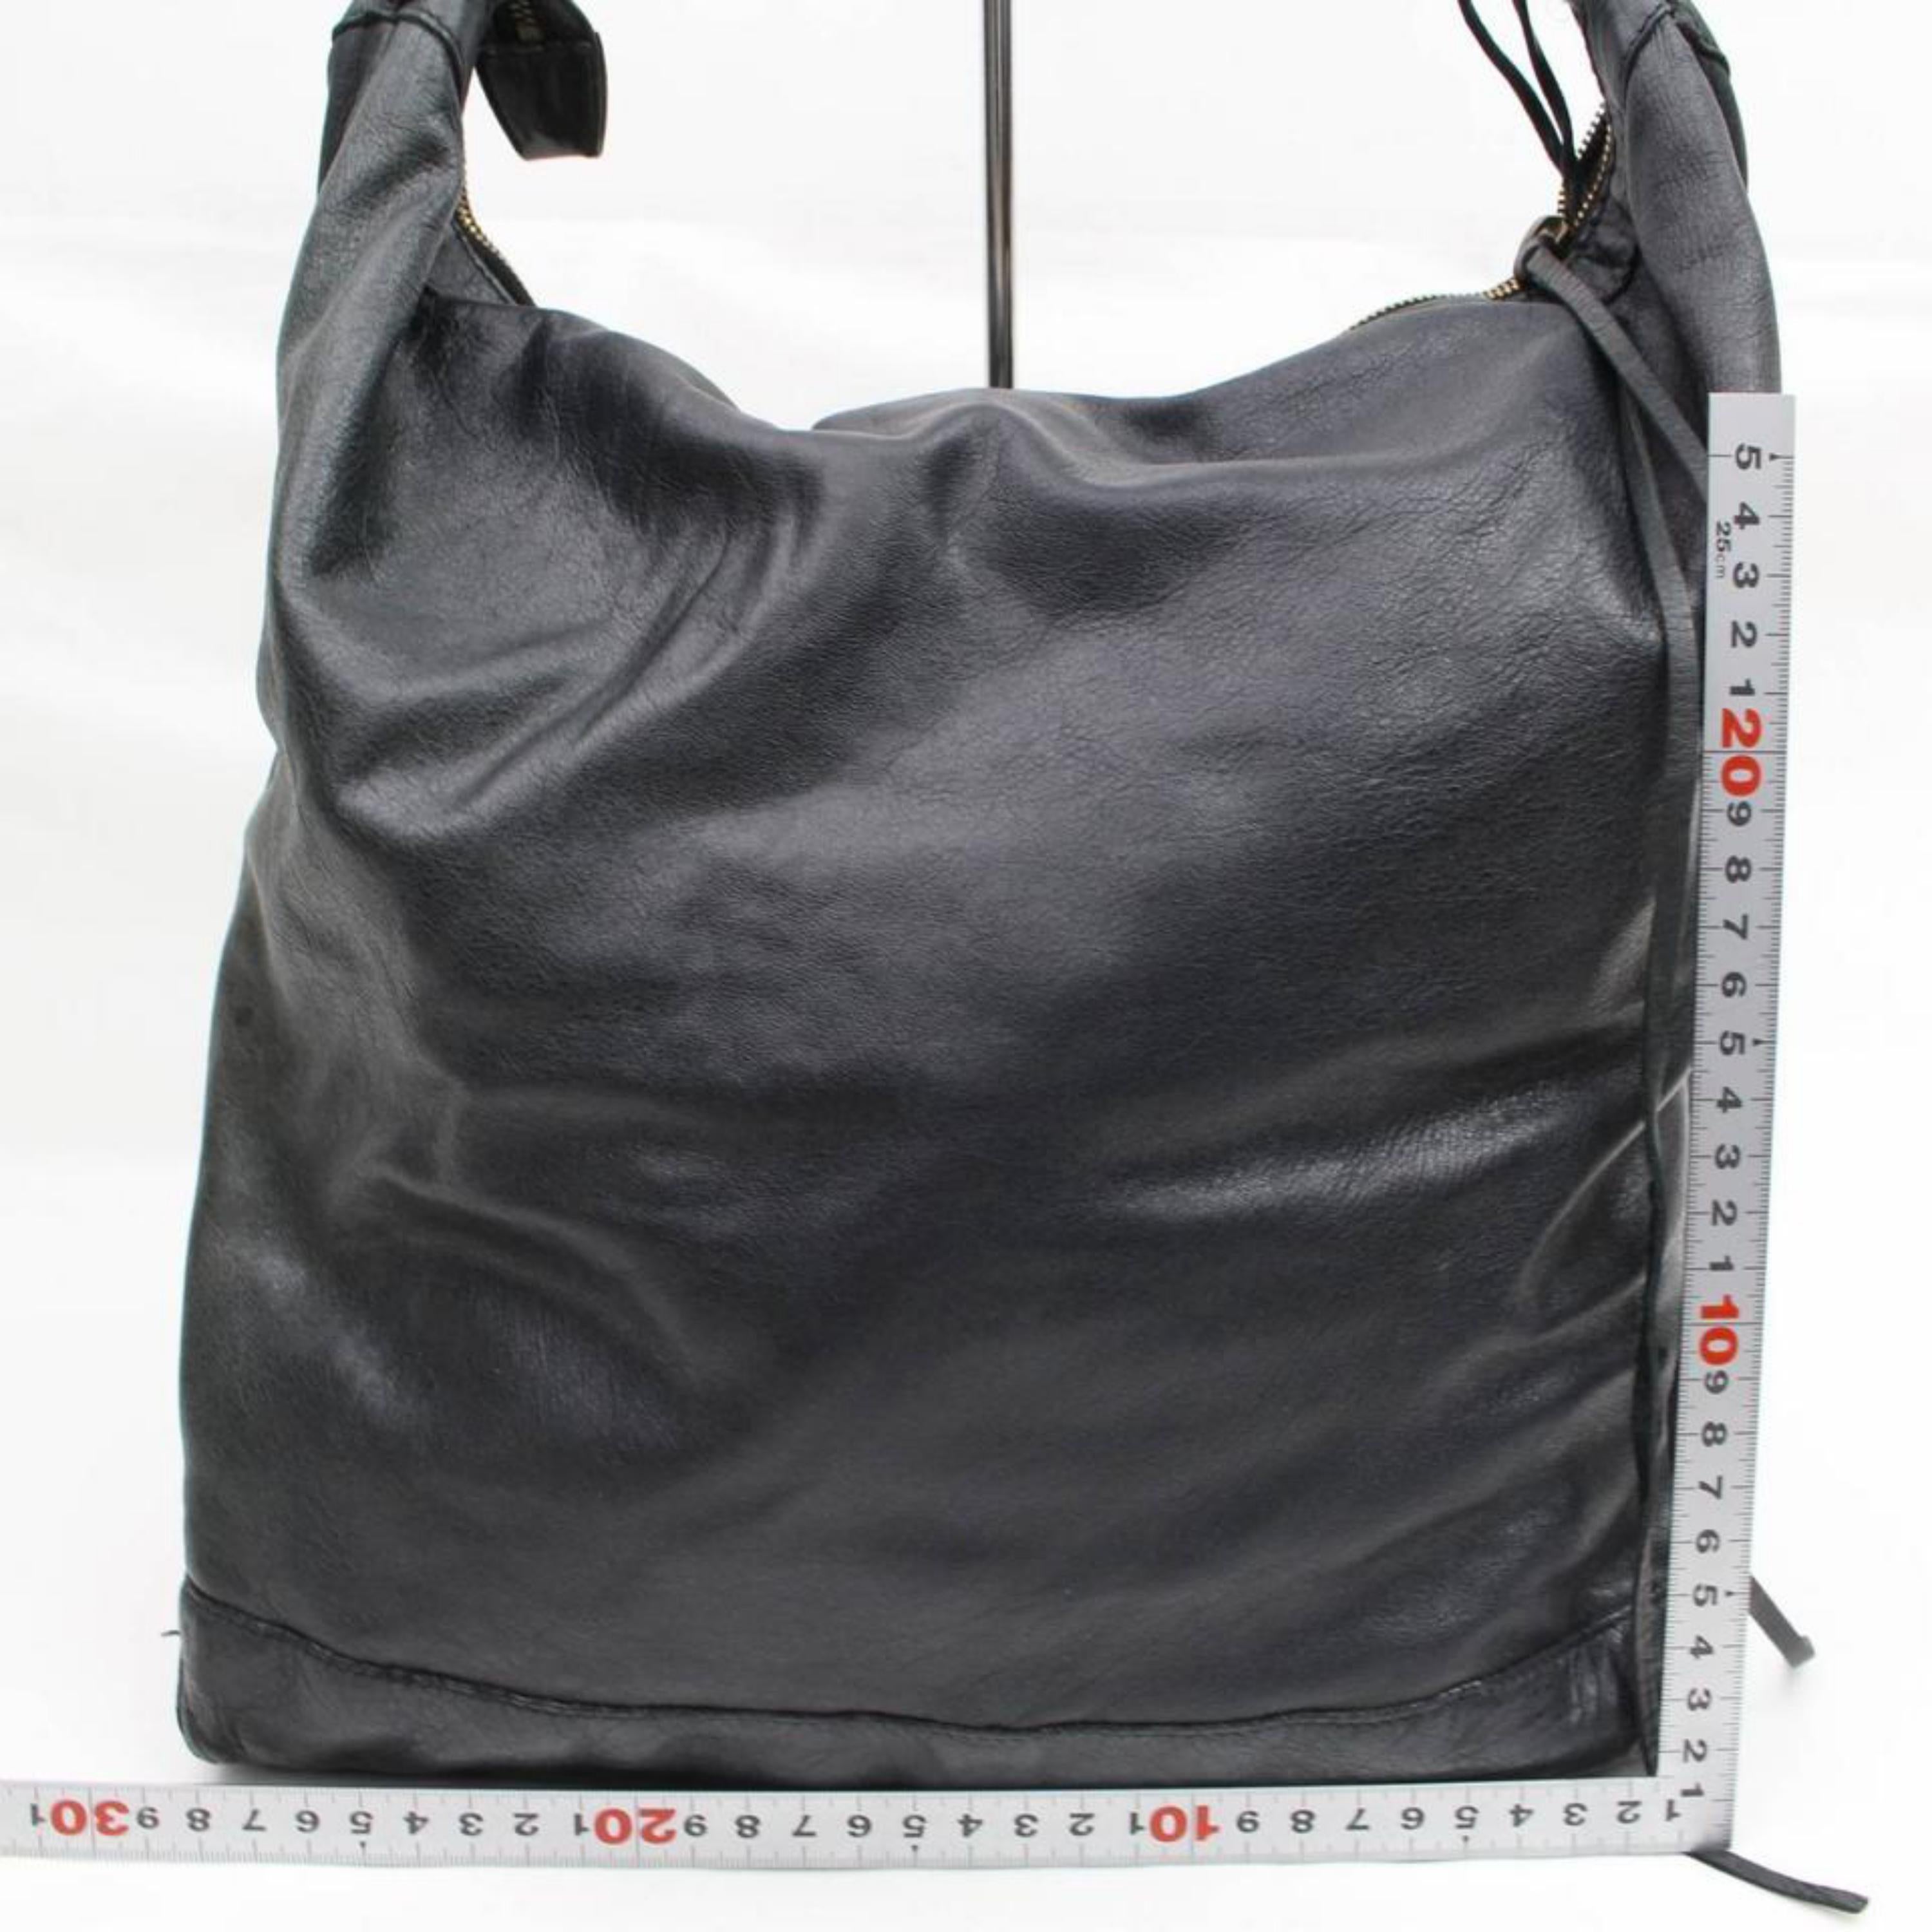 Balenciaga The Day Hobo 868349 Black Leather Shoulder Bag For Sale 2